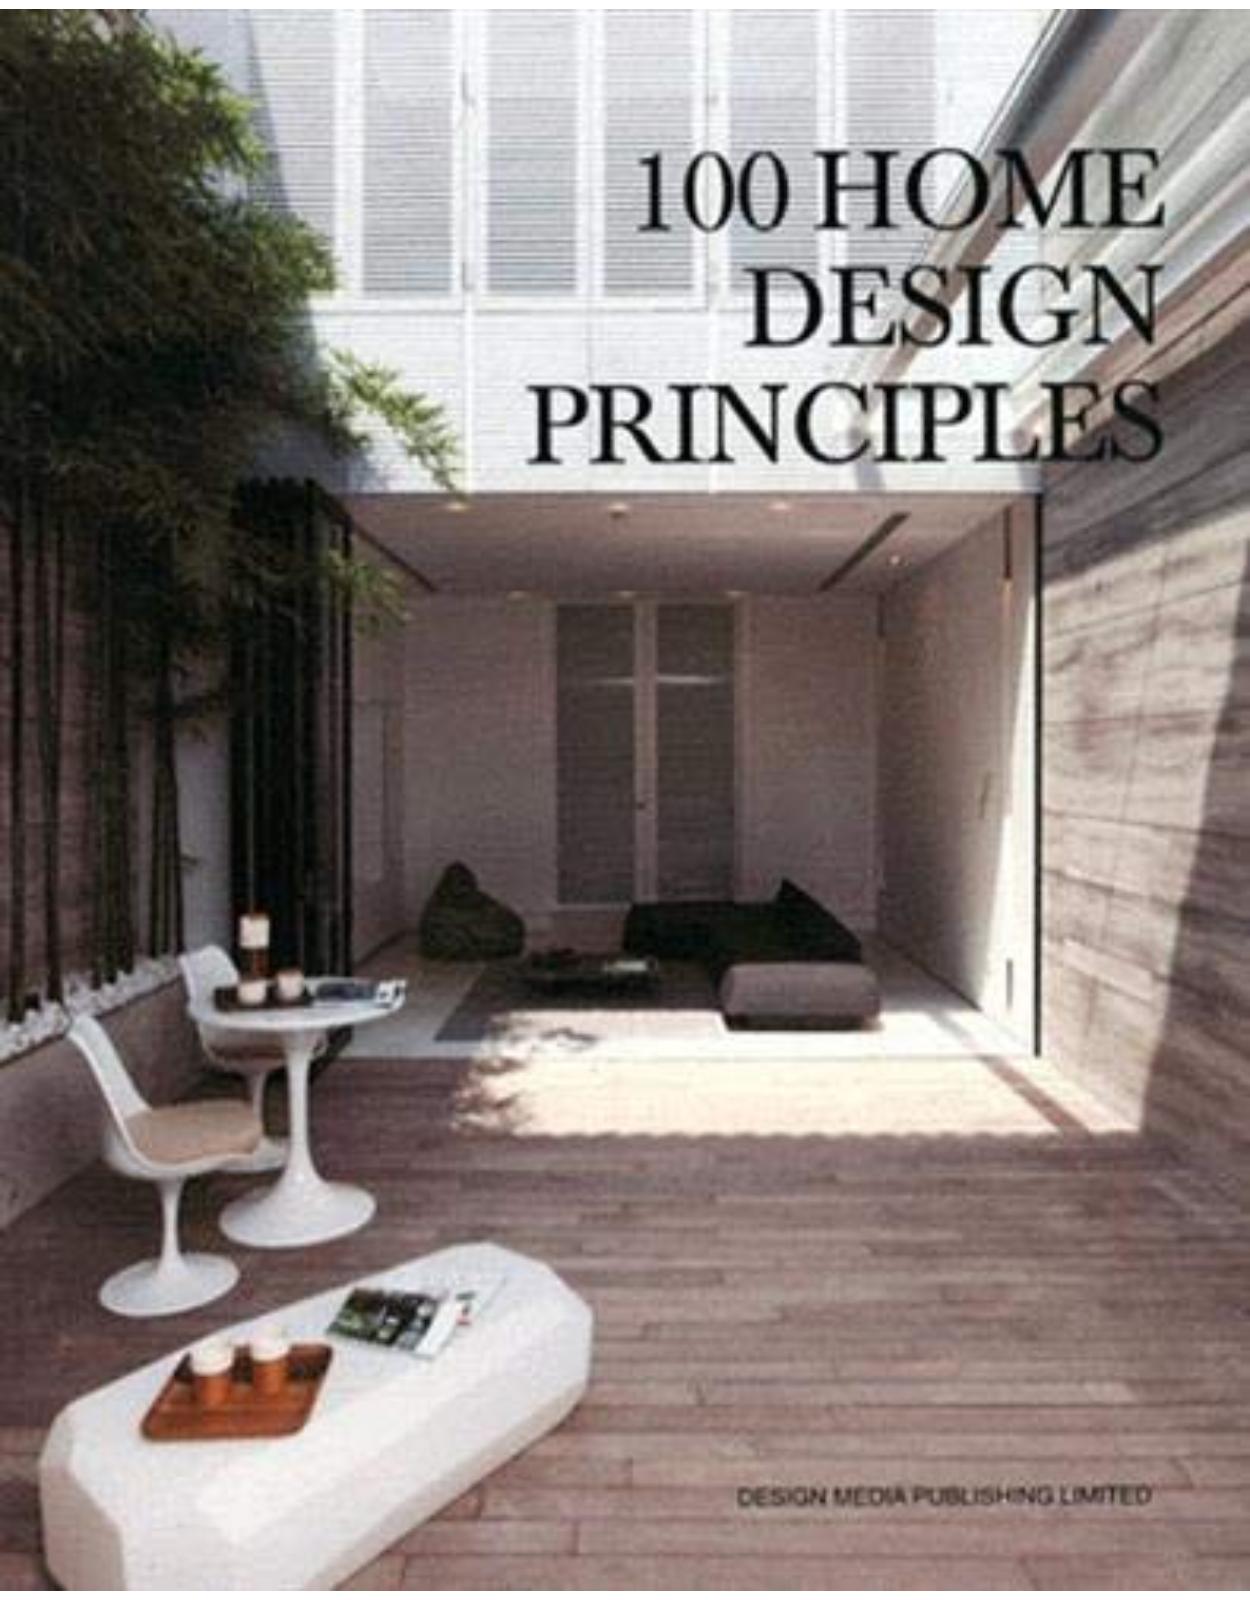 100 Home Design Principles